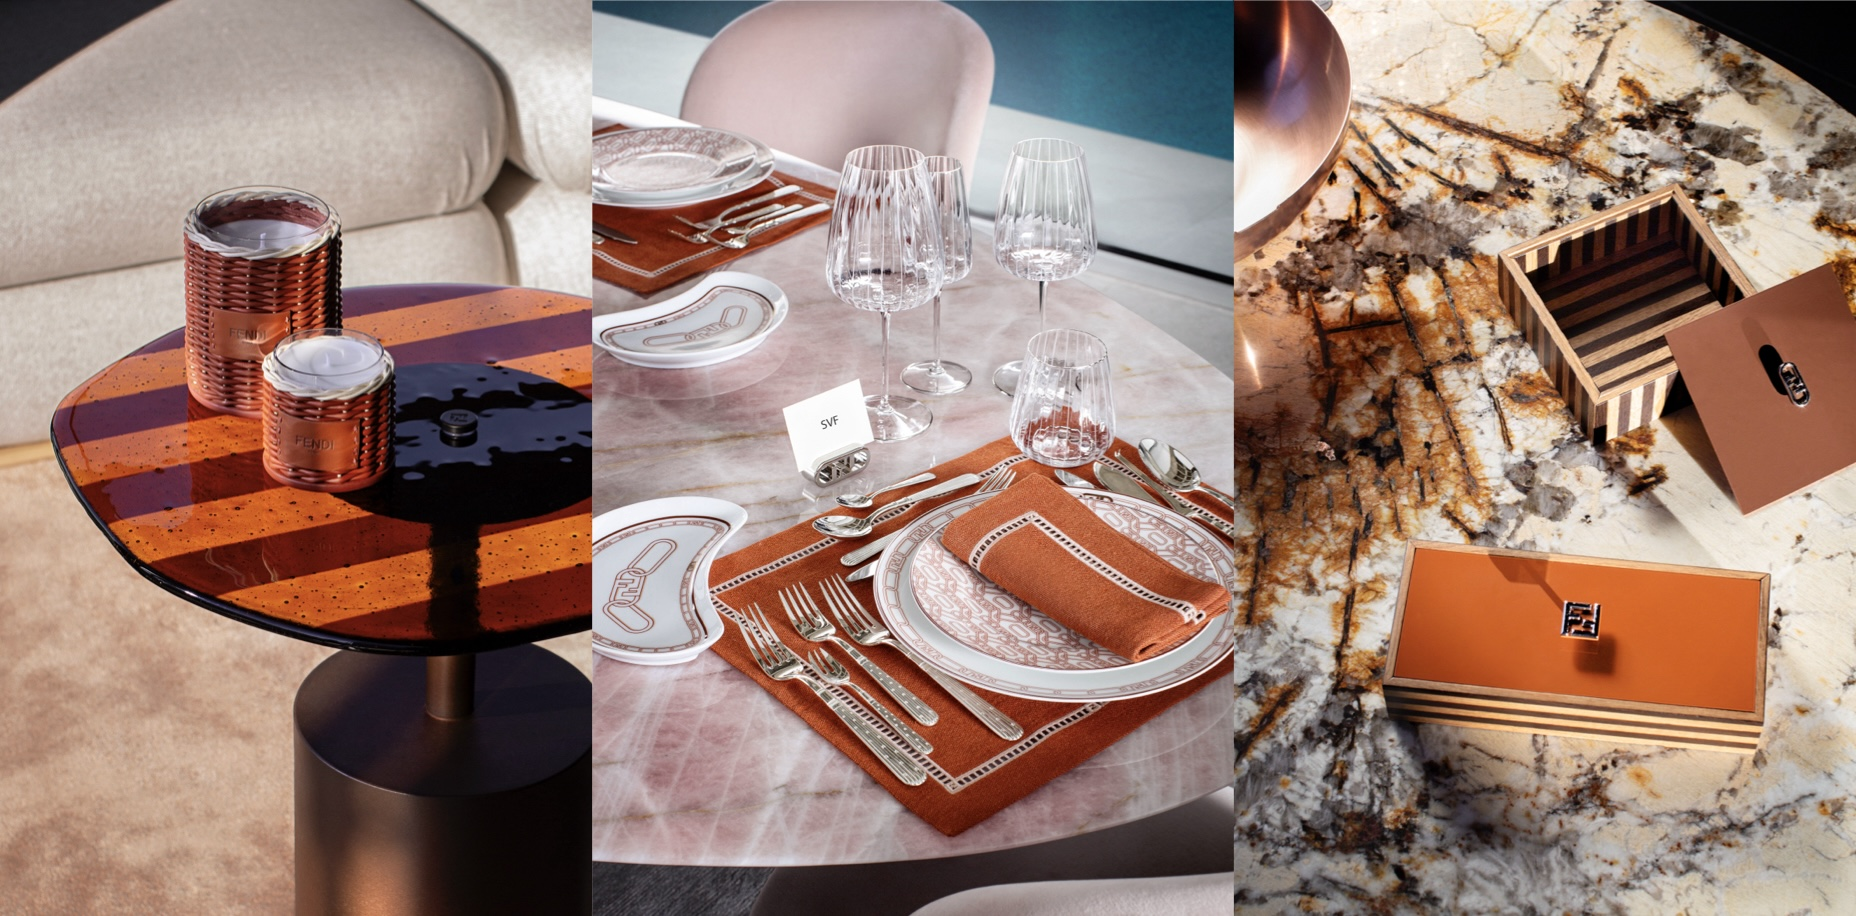 Fendi unveils its latest home decor collection